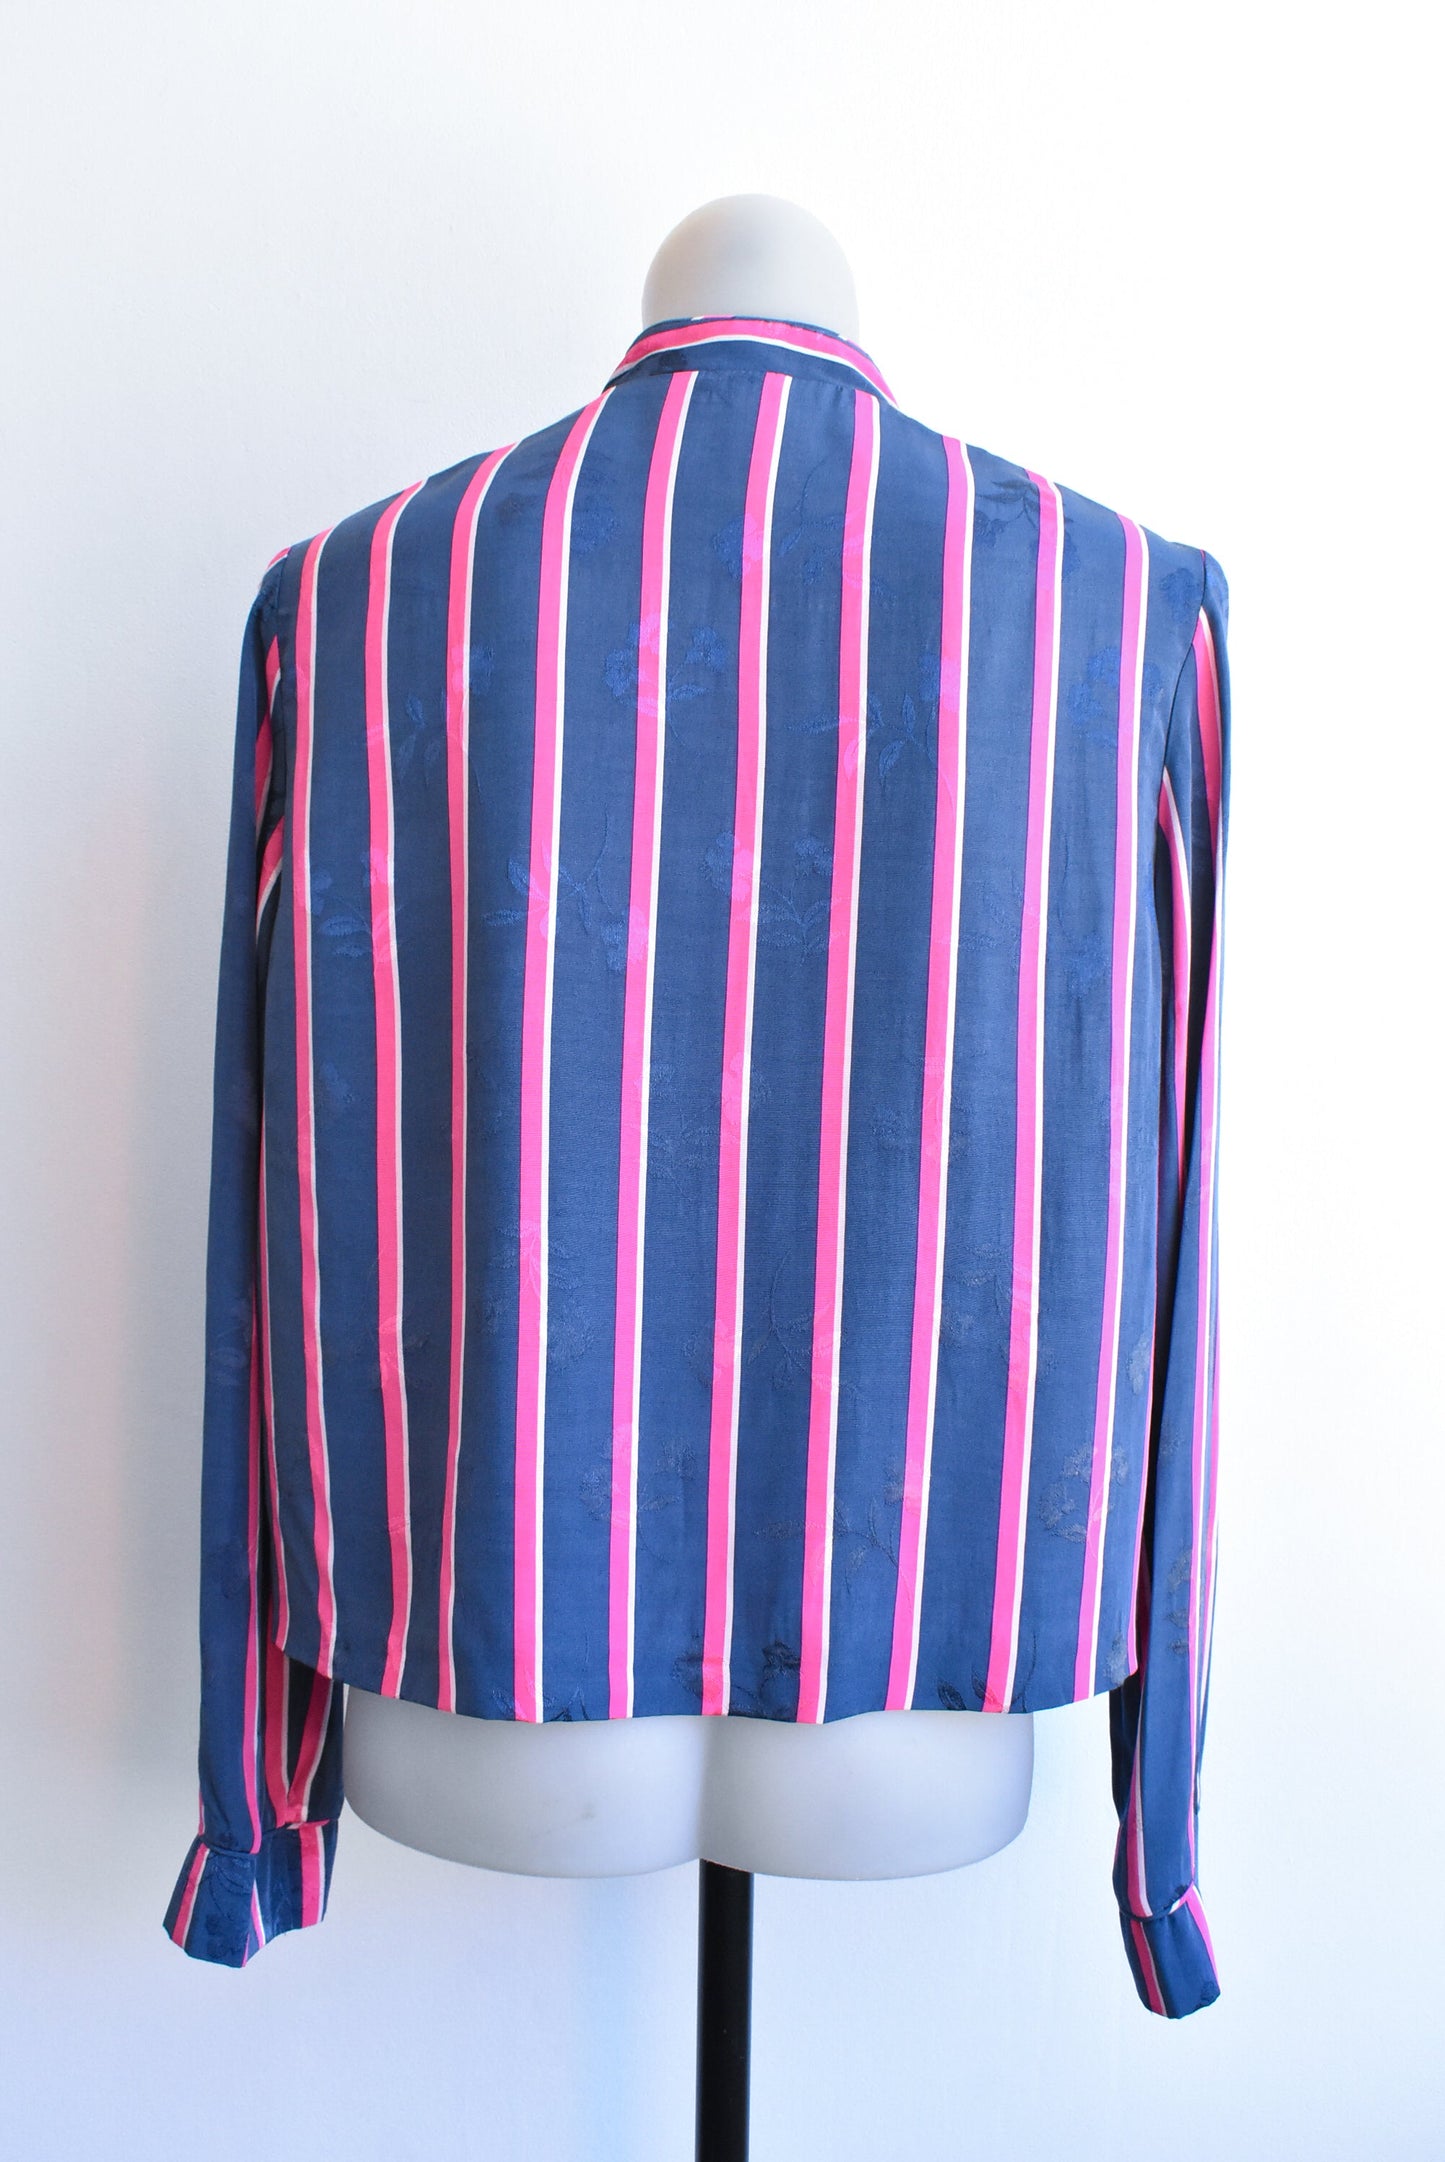 Top Shop Tangzhuang-style satin jacket, size M